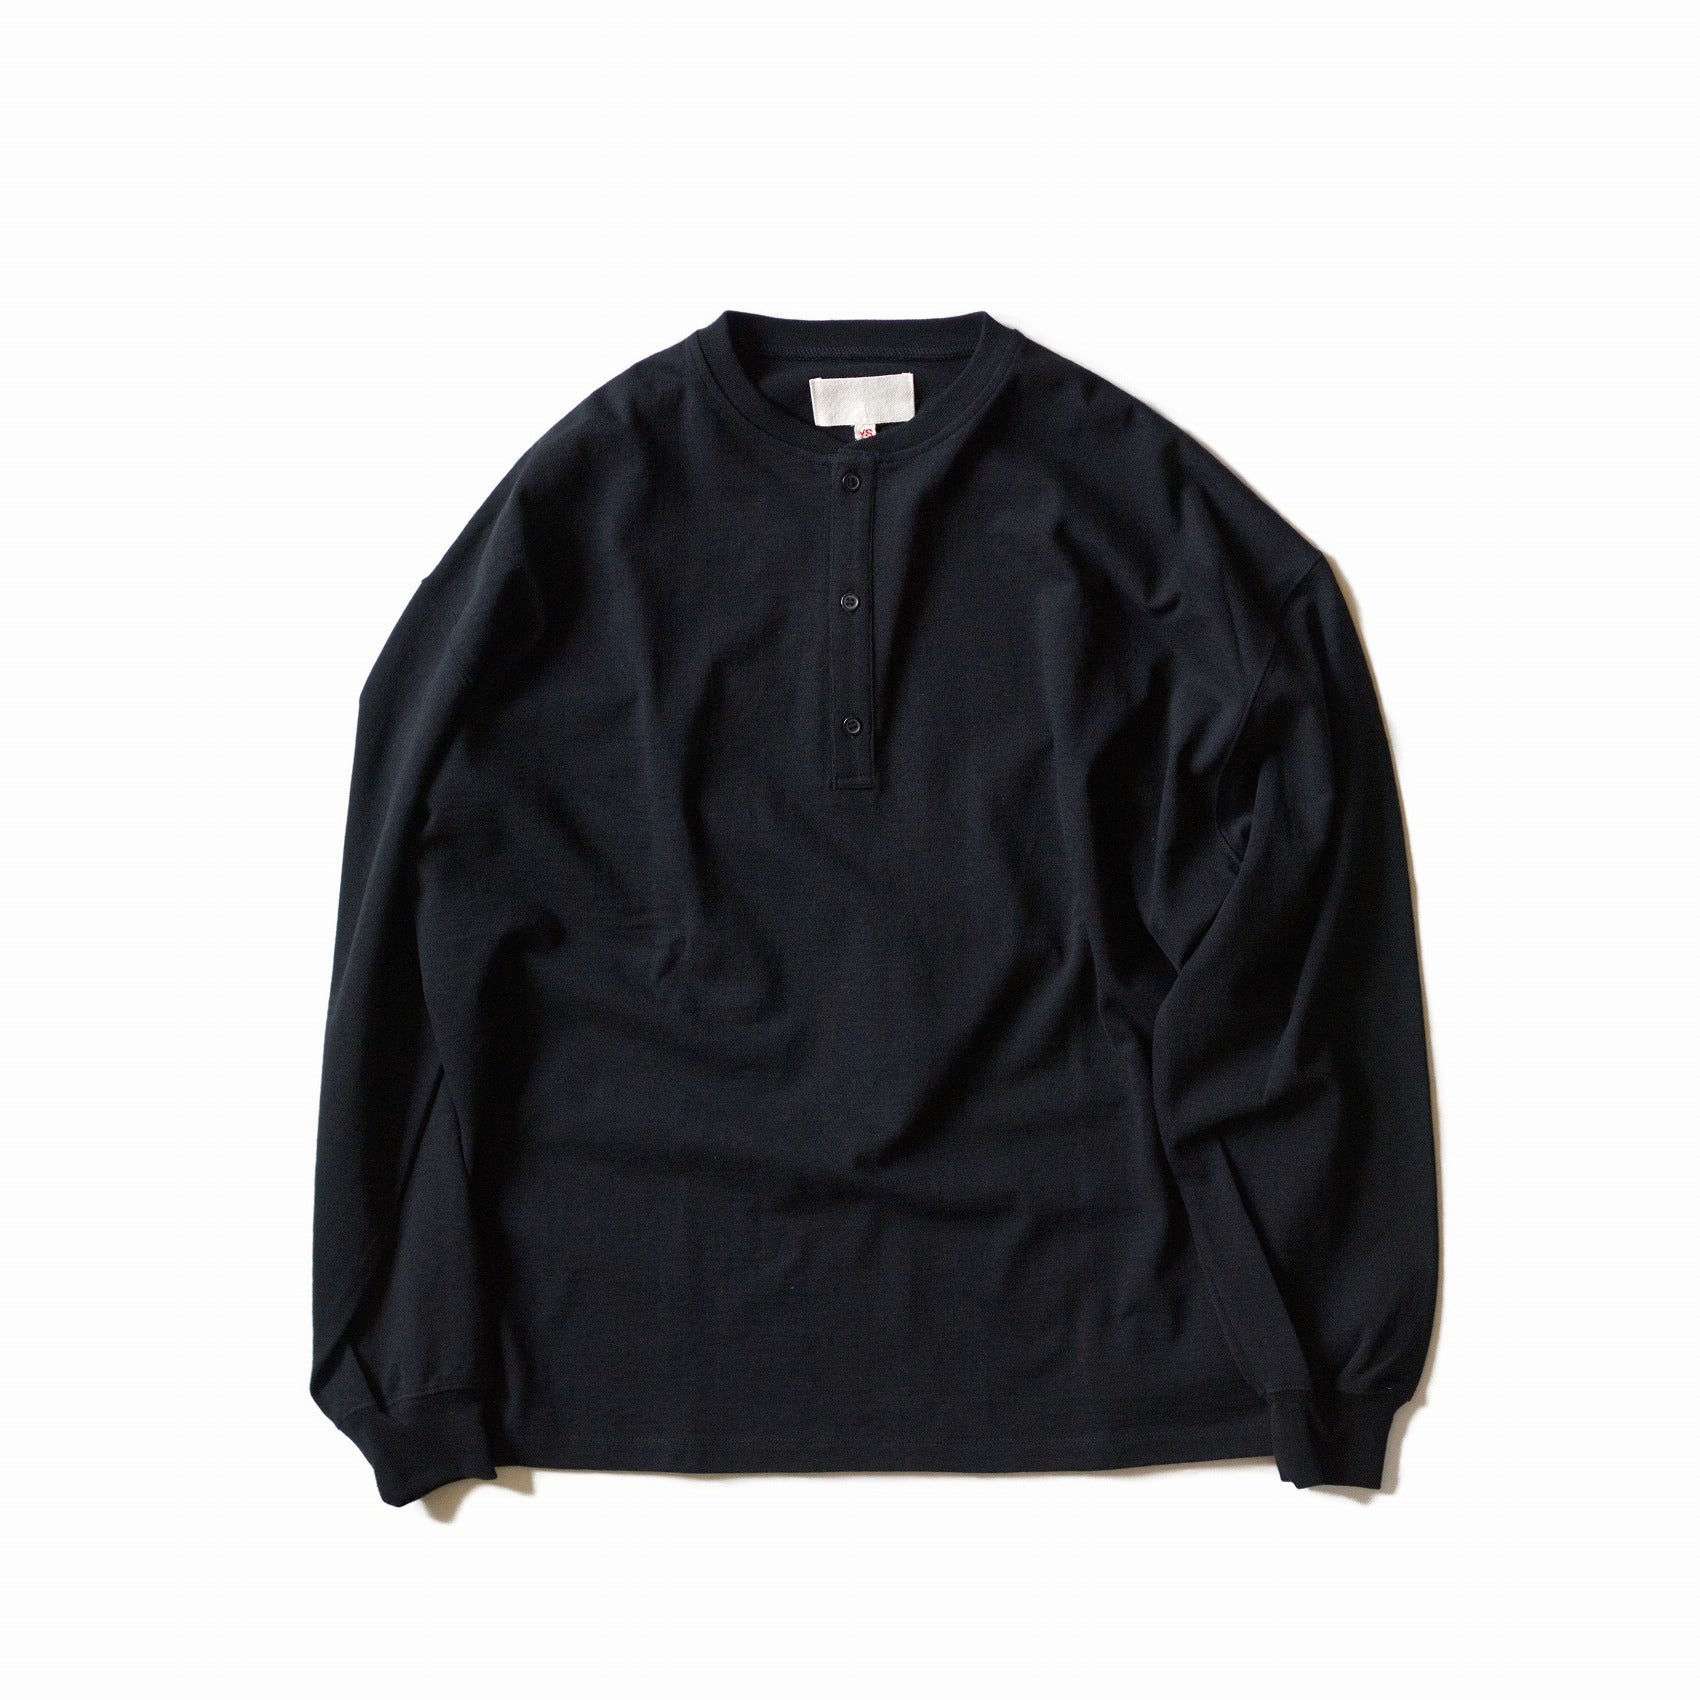 yoko sakamoto ヘンリーネック ロングスリーブ ブラック22aw - Tシャツ 